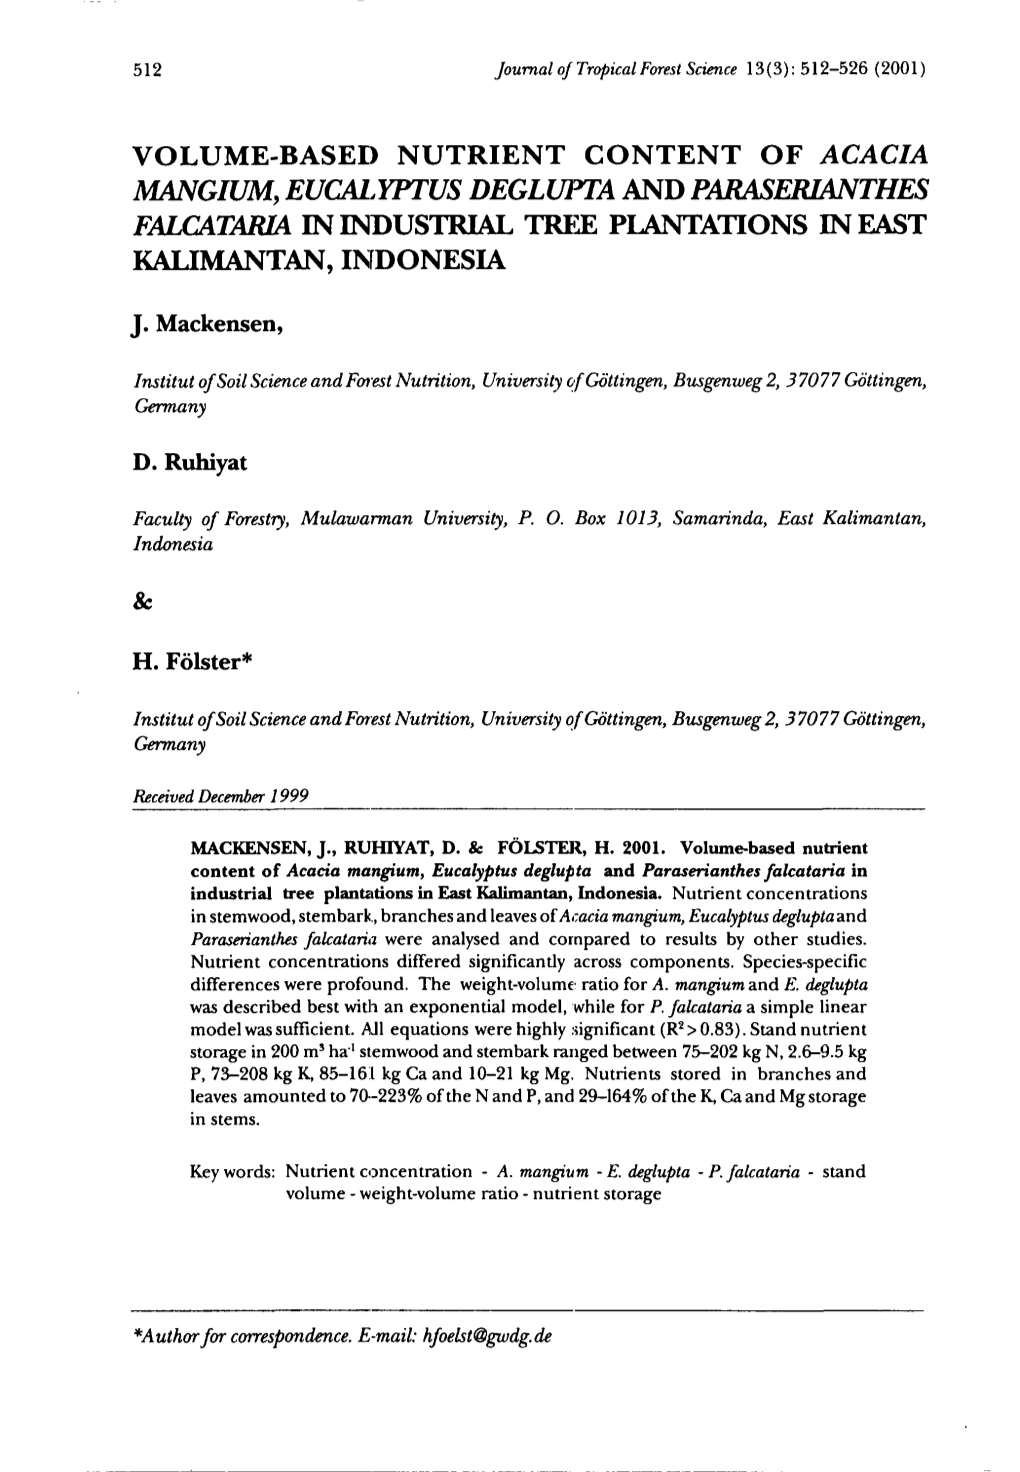 Volume-Based Nutrient Content of Acacia Mangium, Eucalyptus Deglupta Paraserianthesd an Falcataria Industrian I L Tree Plantation Easn Si T Kalimantan, Indonesia